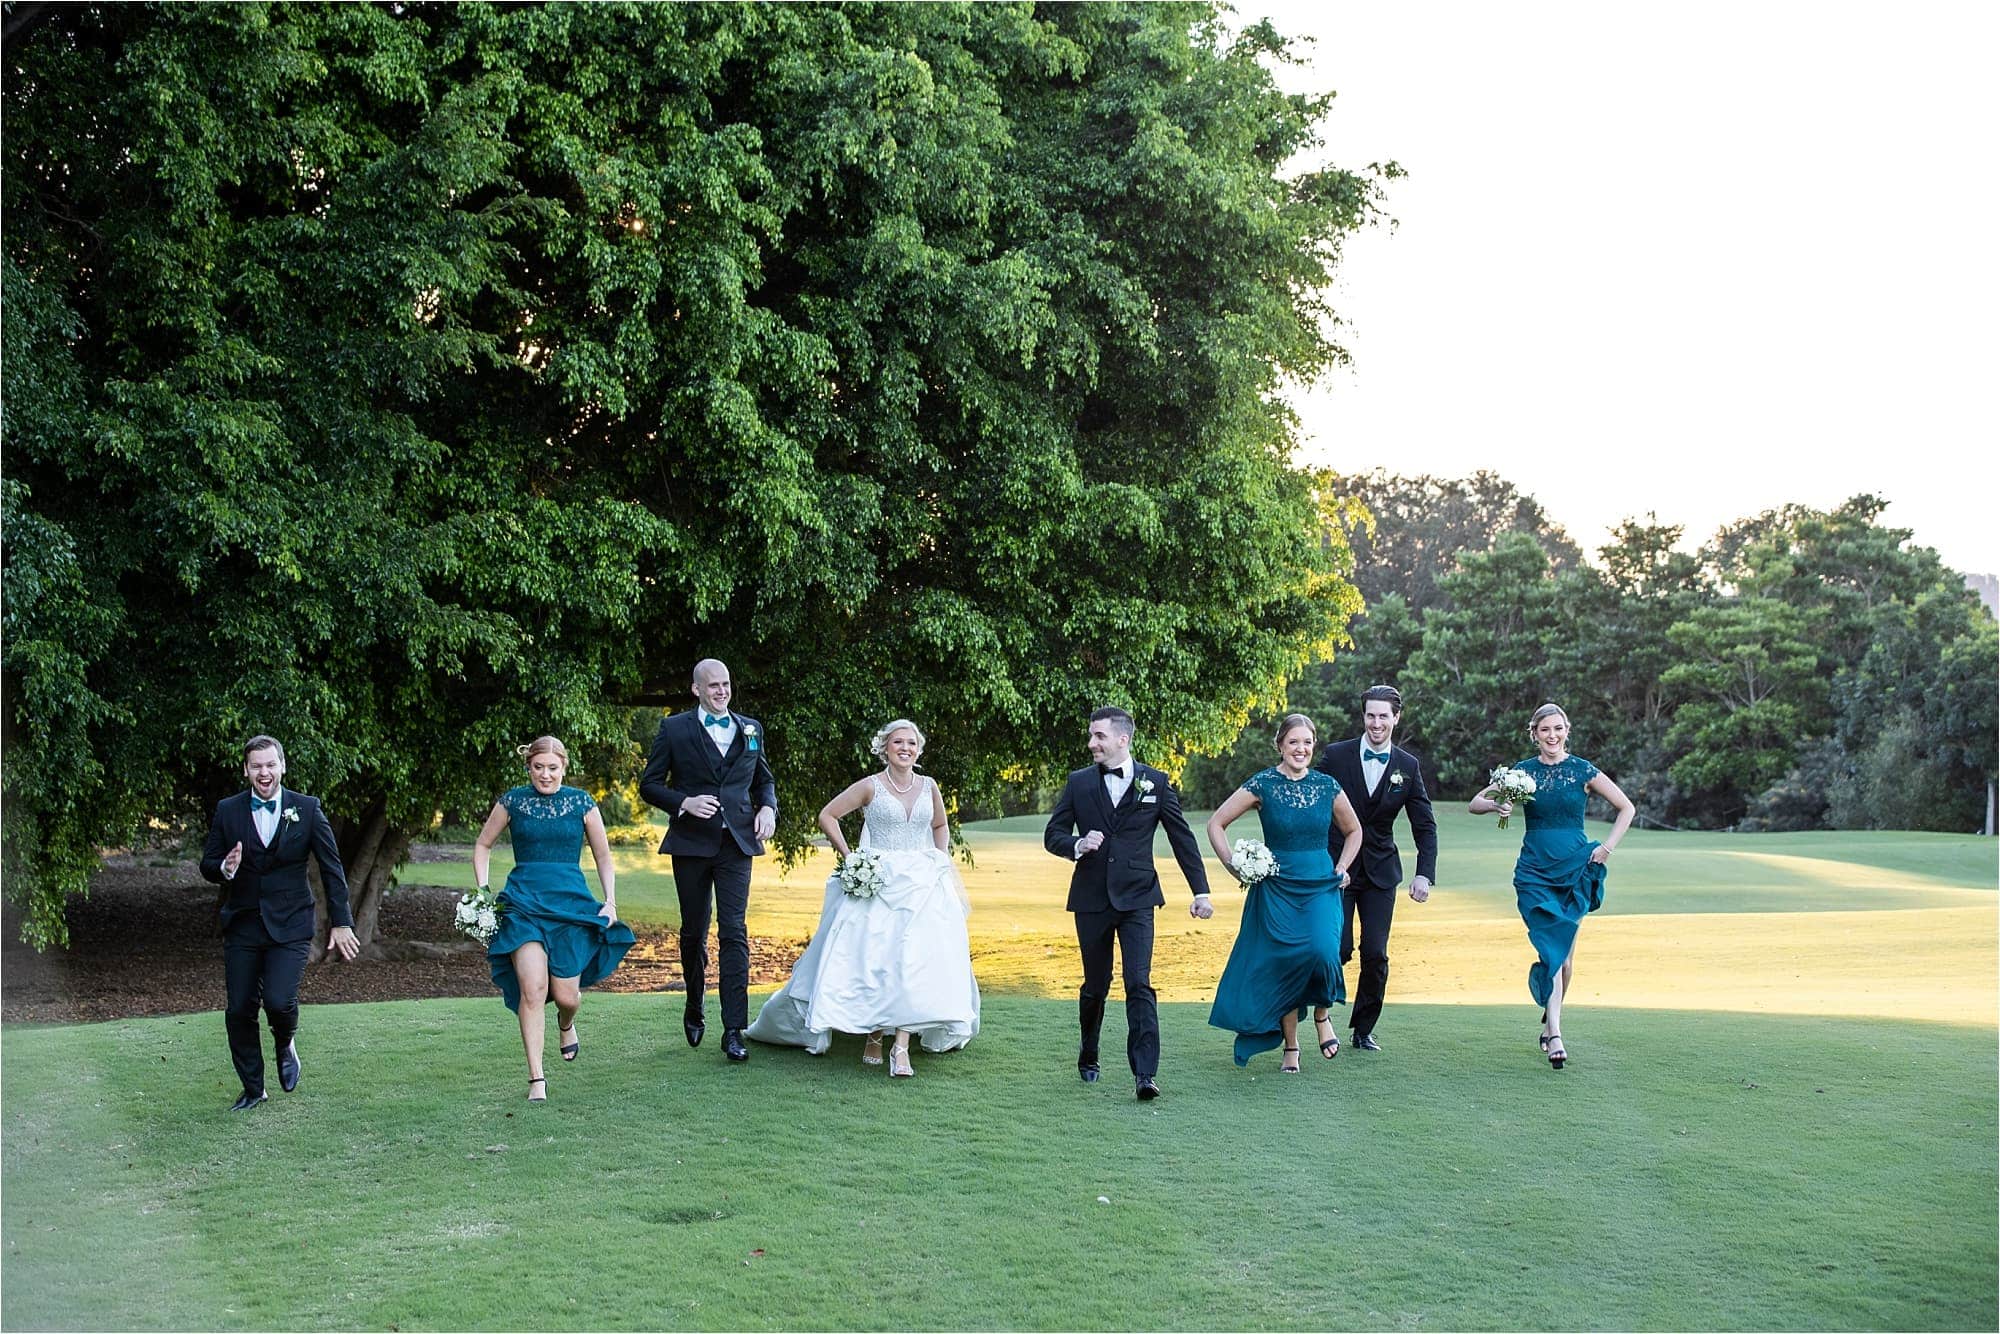 Indooroopilly Golf Club wedding by Brisbane wedding photographer, Mooi Photography.